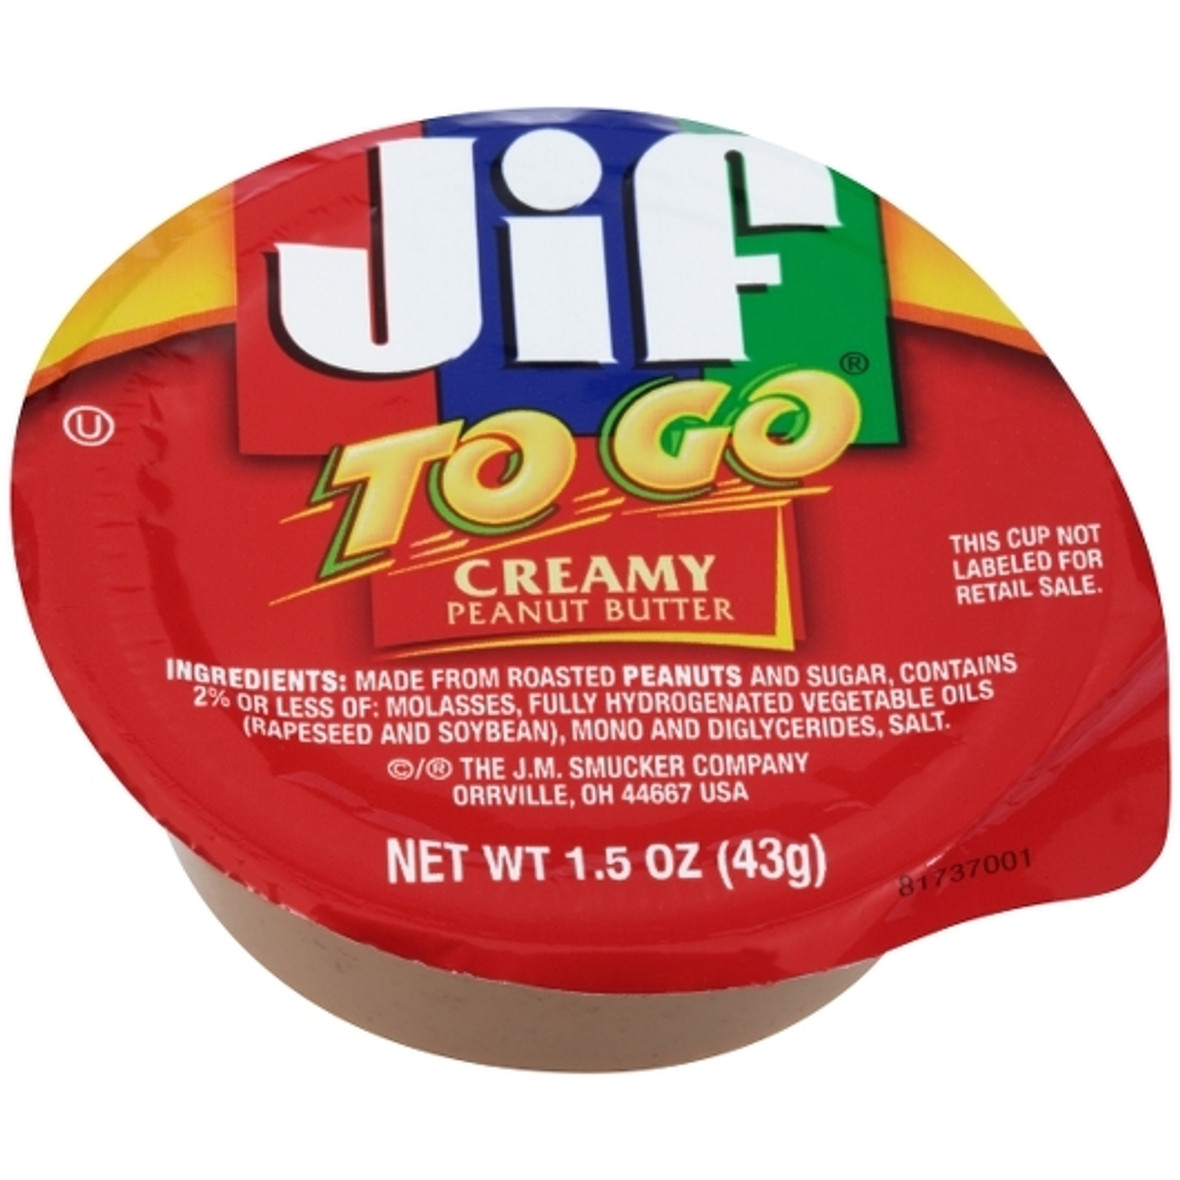 Jif To Go Creamy Peanut Butter, 1.5 Ounces, 96 Per Case